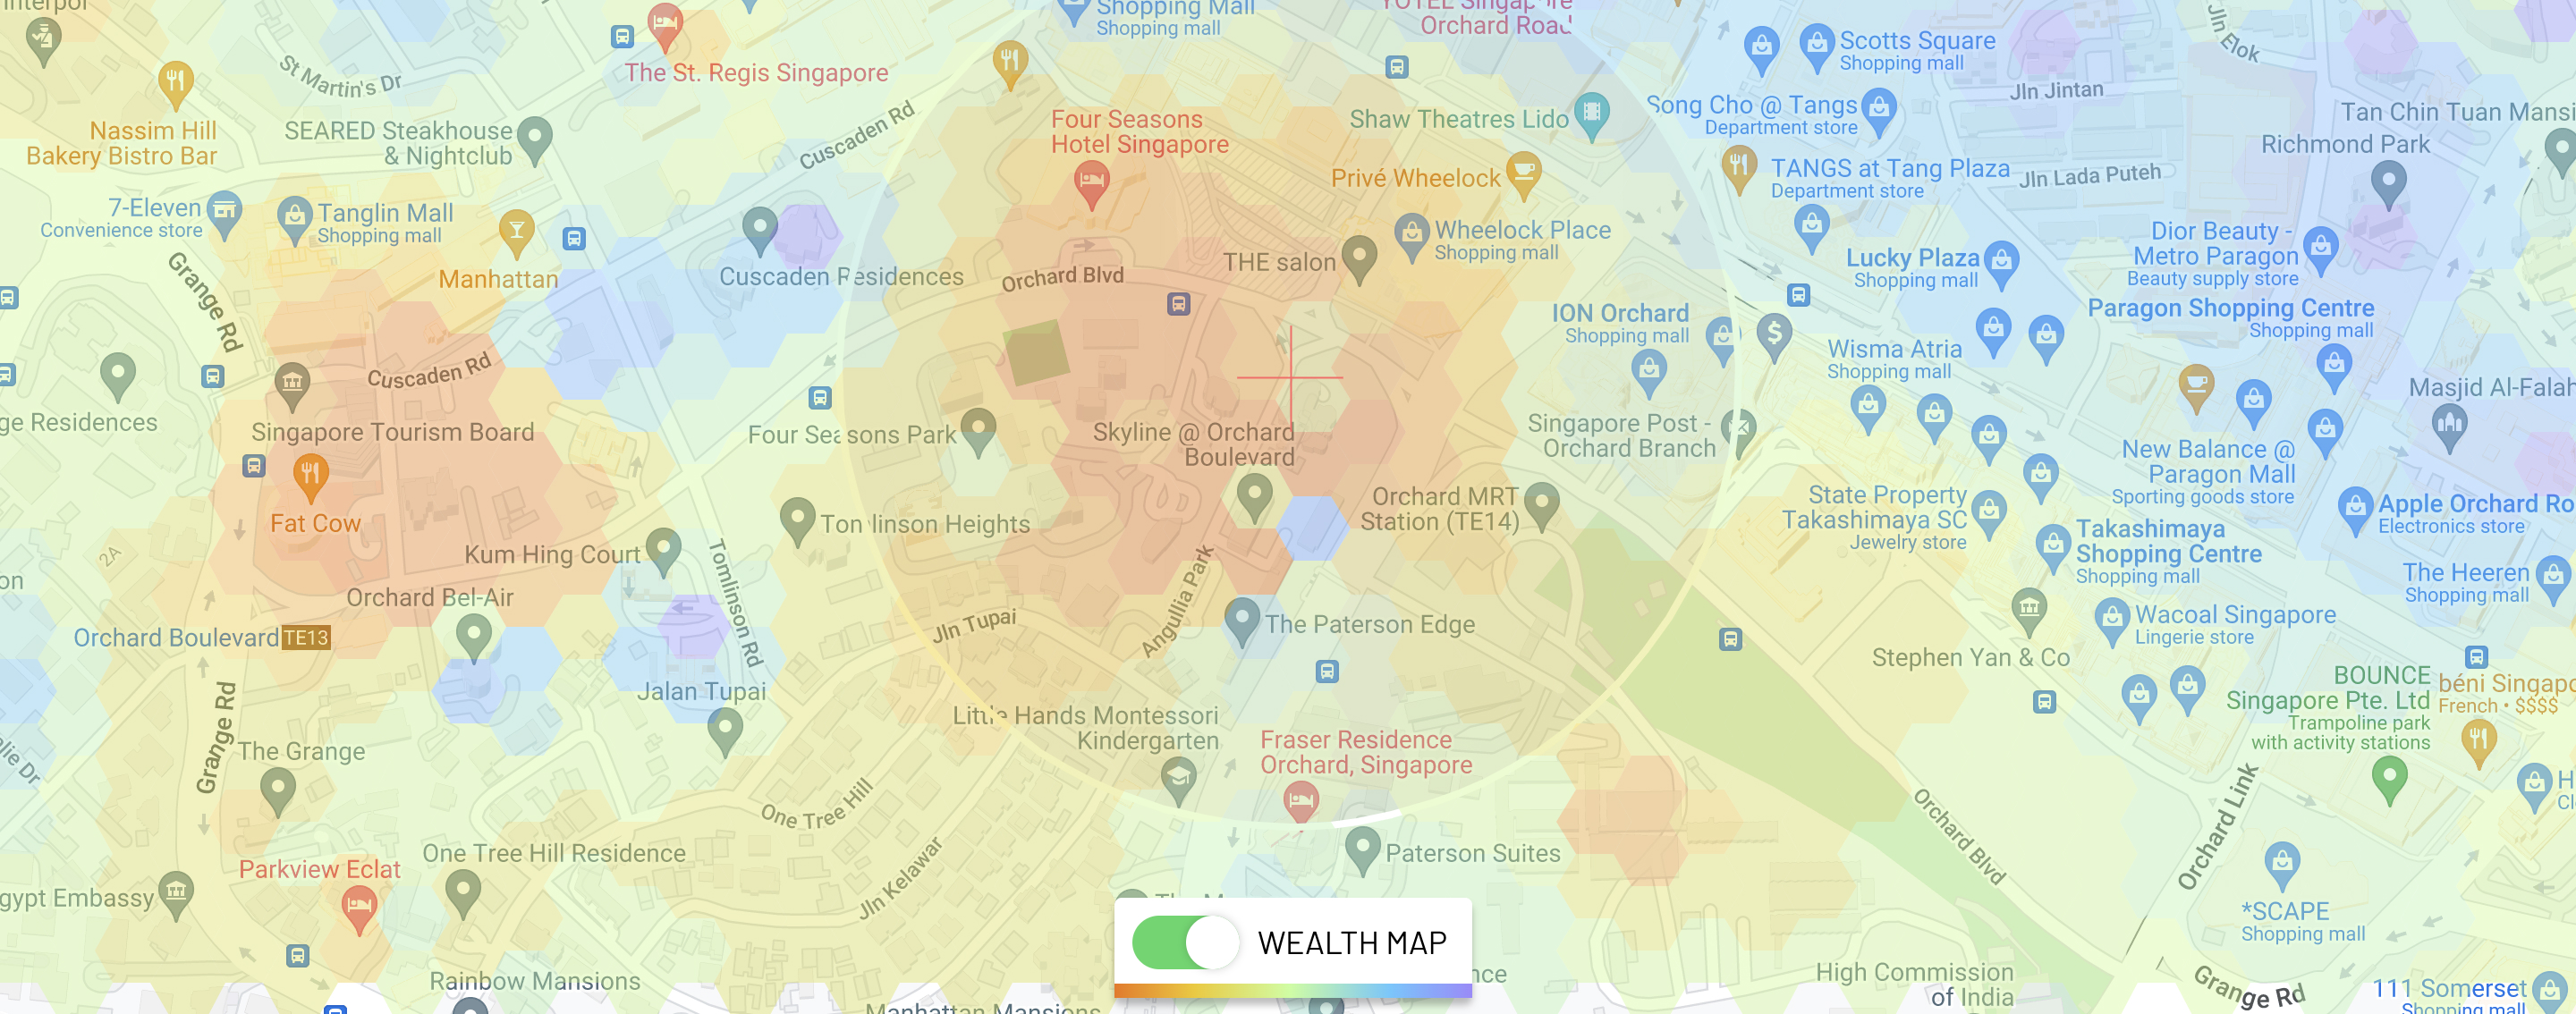 Location Intelligence with wealth heatmap